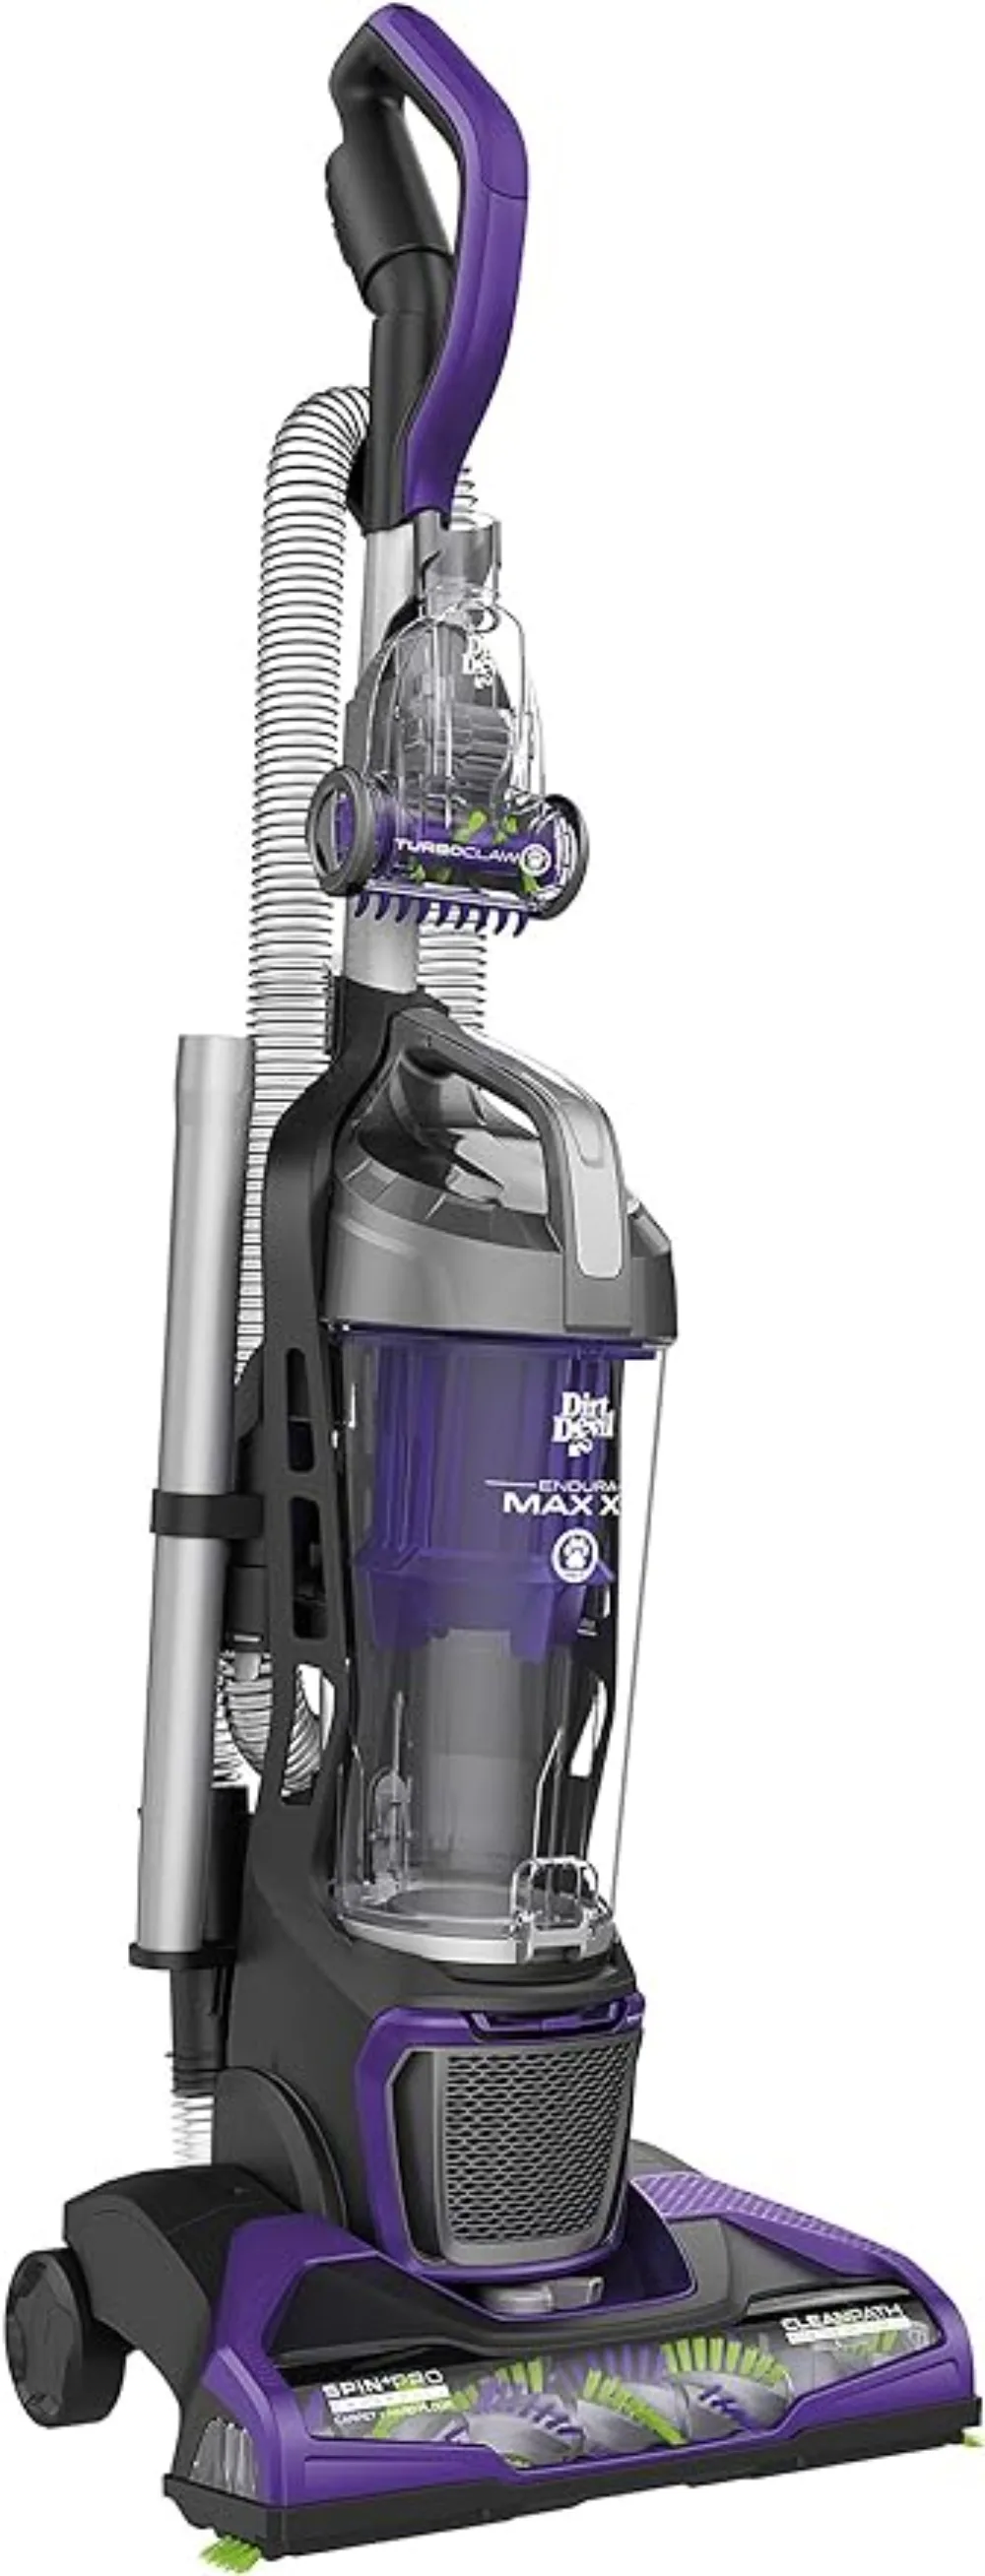 

Dirt Devil Endura Max XL Upright Vacuum Cleaner for Pets, Bagless, Lightweight, UD70186, Purple